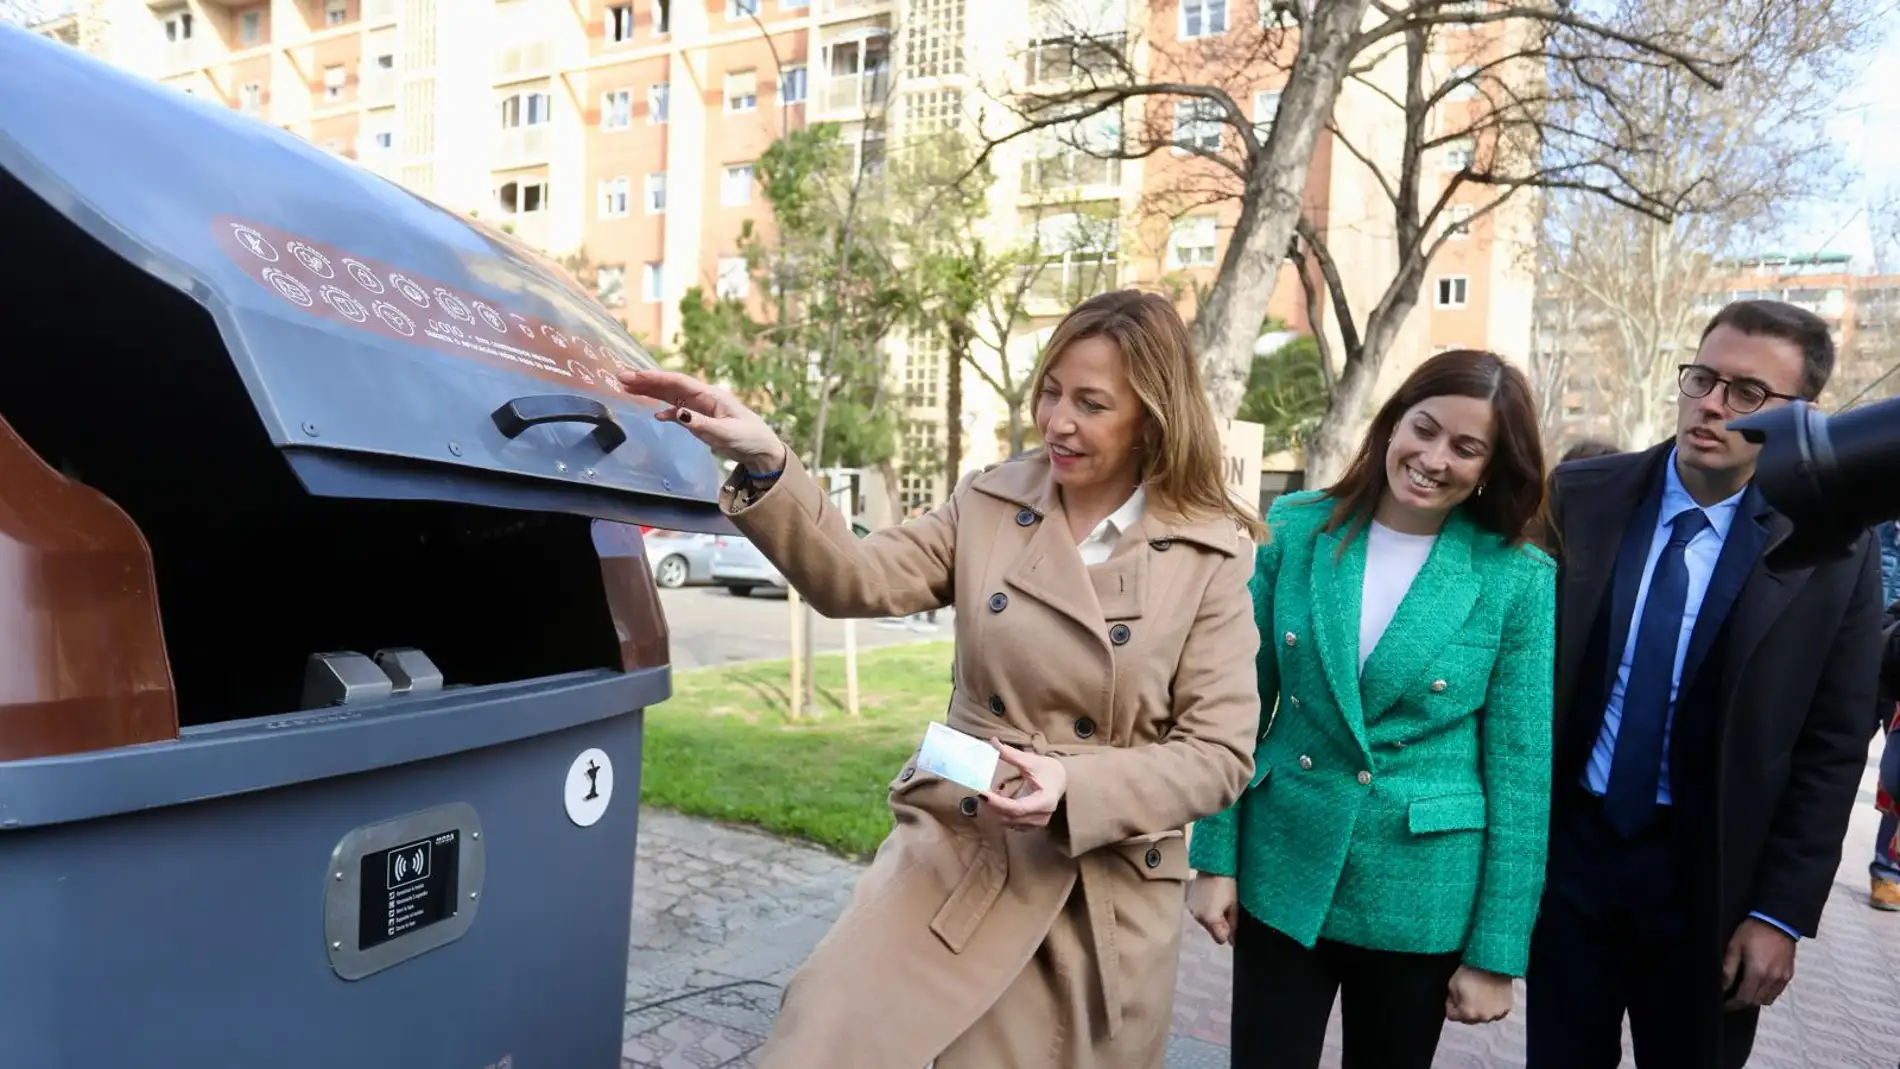 La alcaldesa de Zaragoza, Natalia Chueca, prueba el contenedor marrón